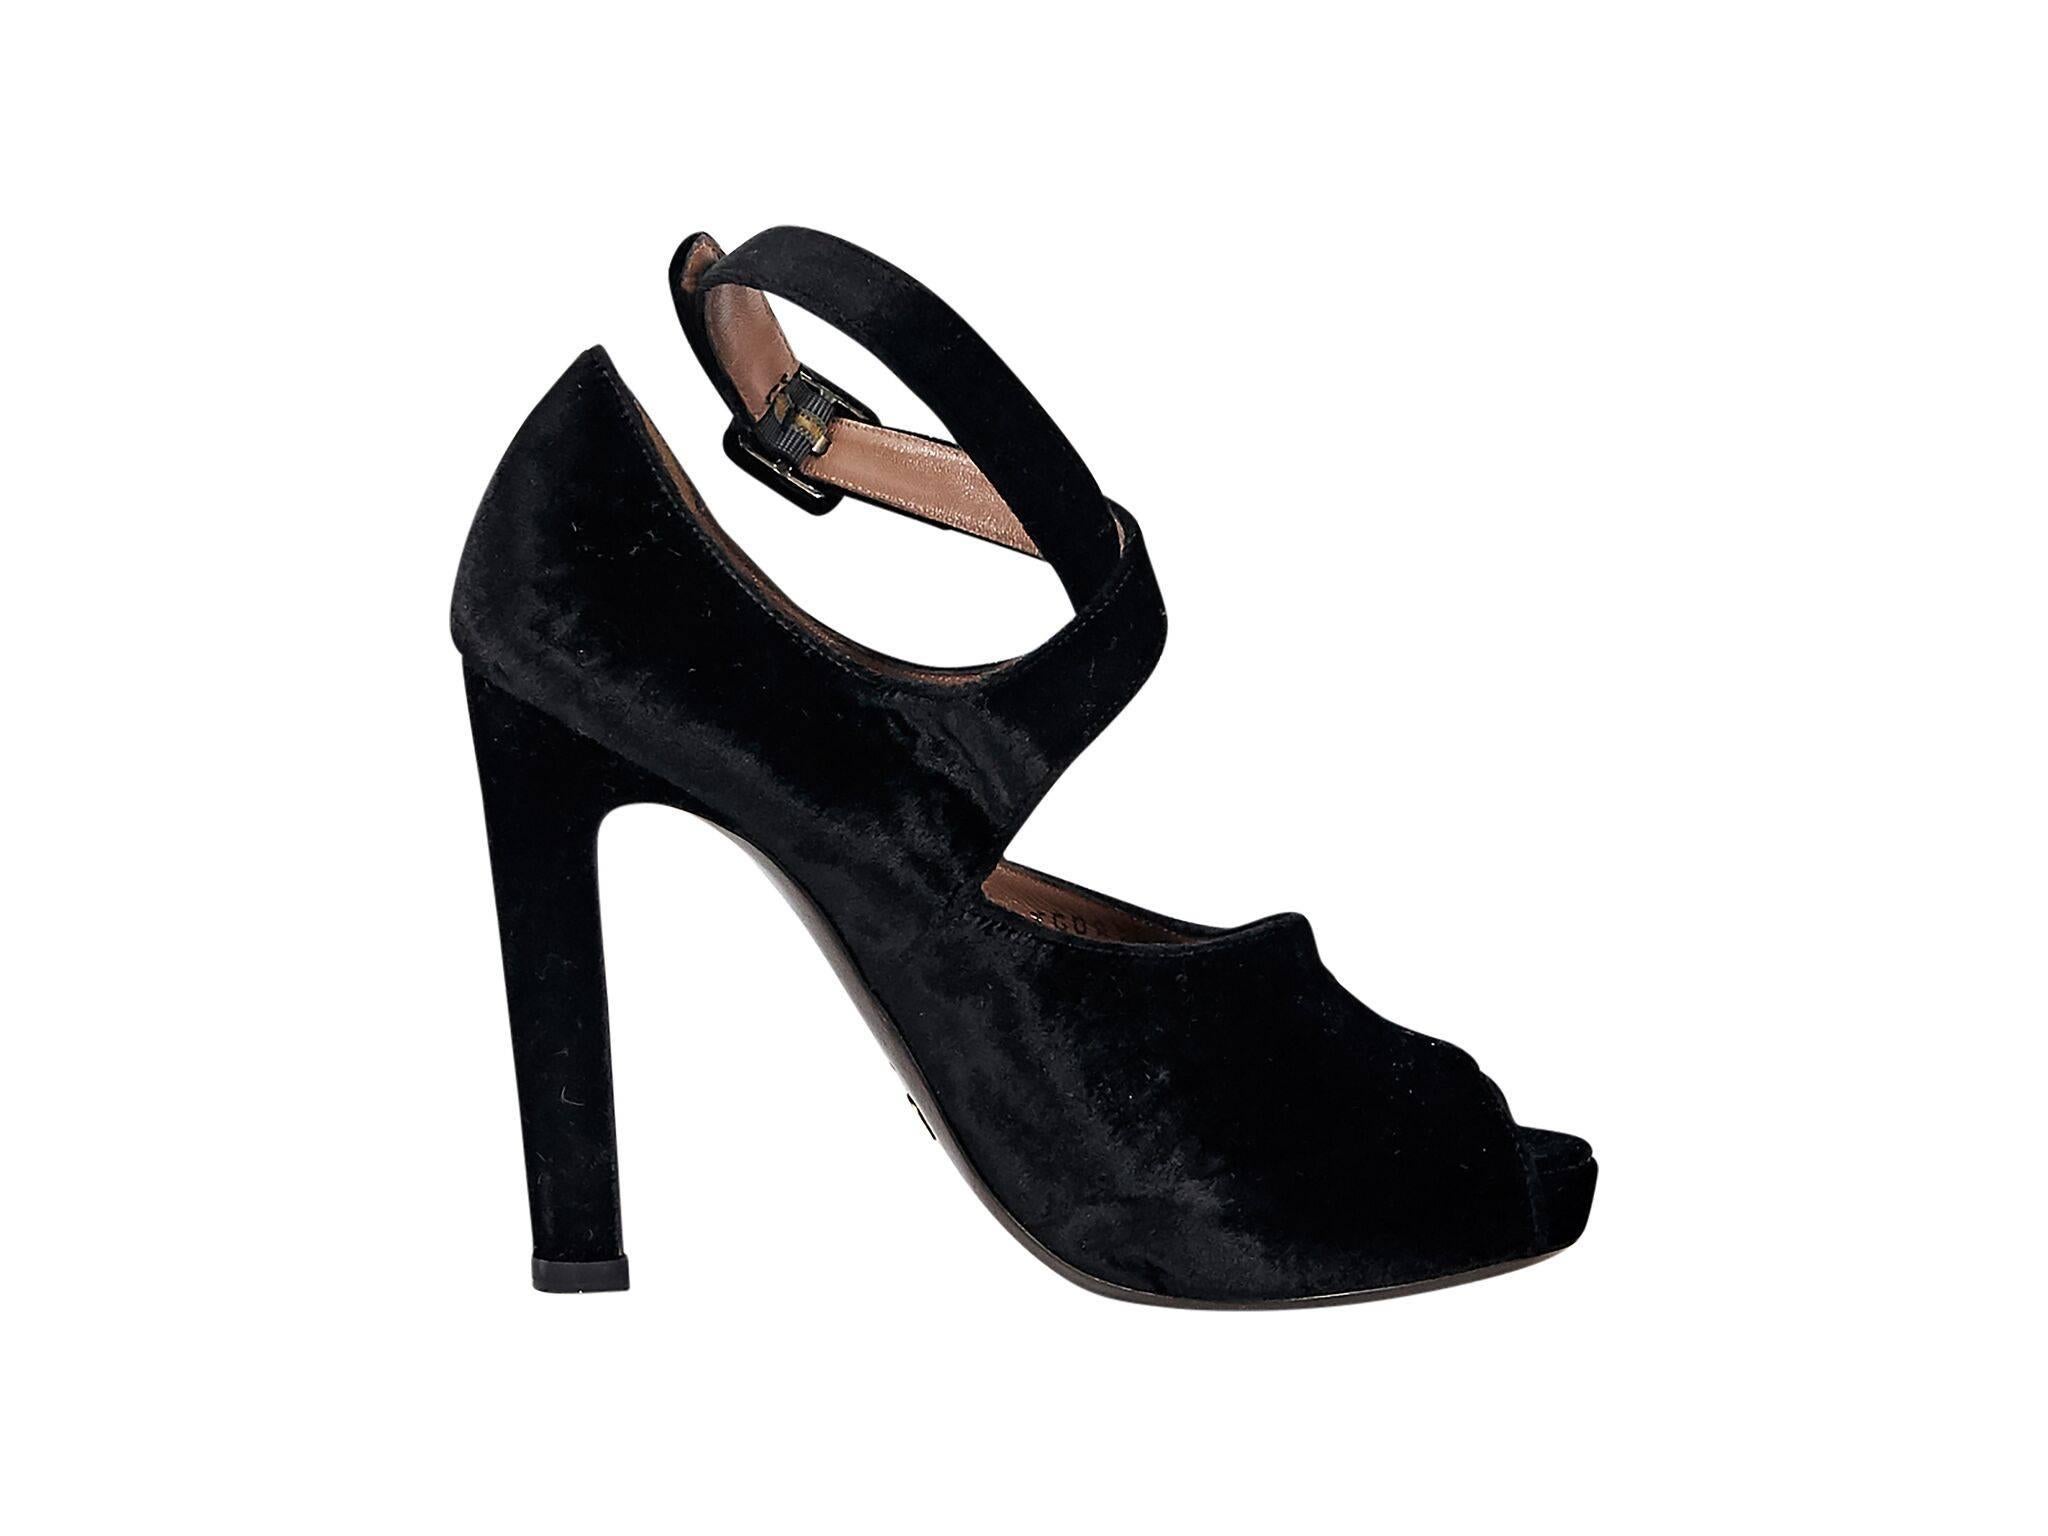 Product details:  Black velvet platform pumps by Giorgio Armani.  Adjustable ankle strap.  Peep toe.  
Condition: Pre-owned. Very good.
Est. Retail $585